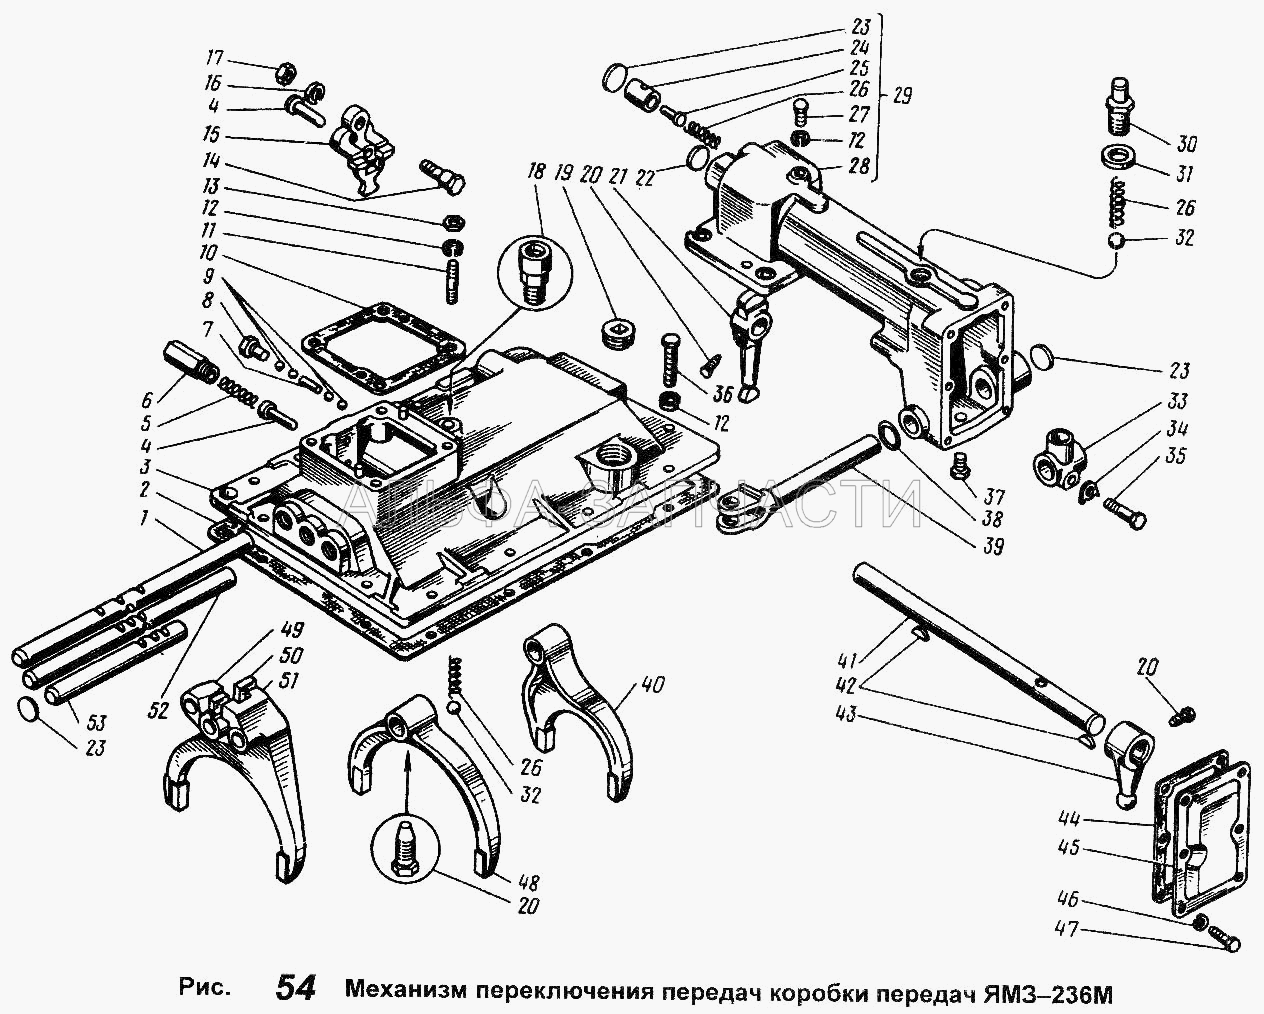 Механизм переключения передач коробки передач ЯМЗ-236М  